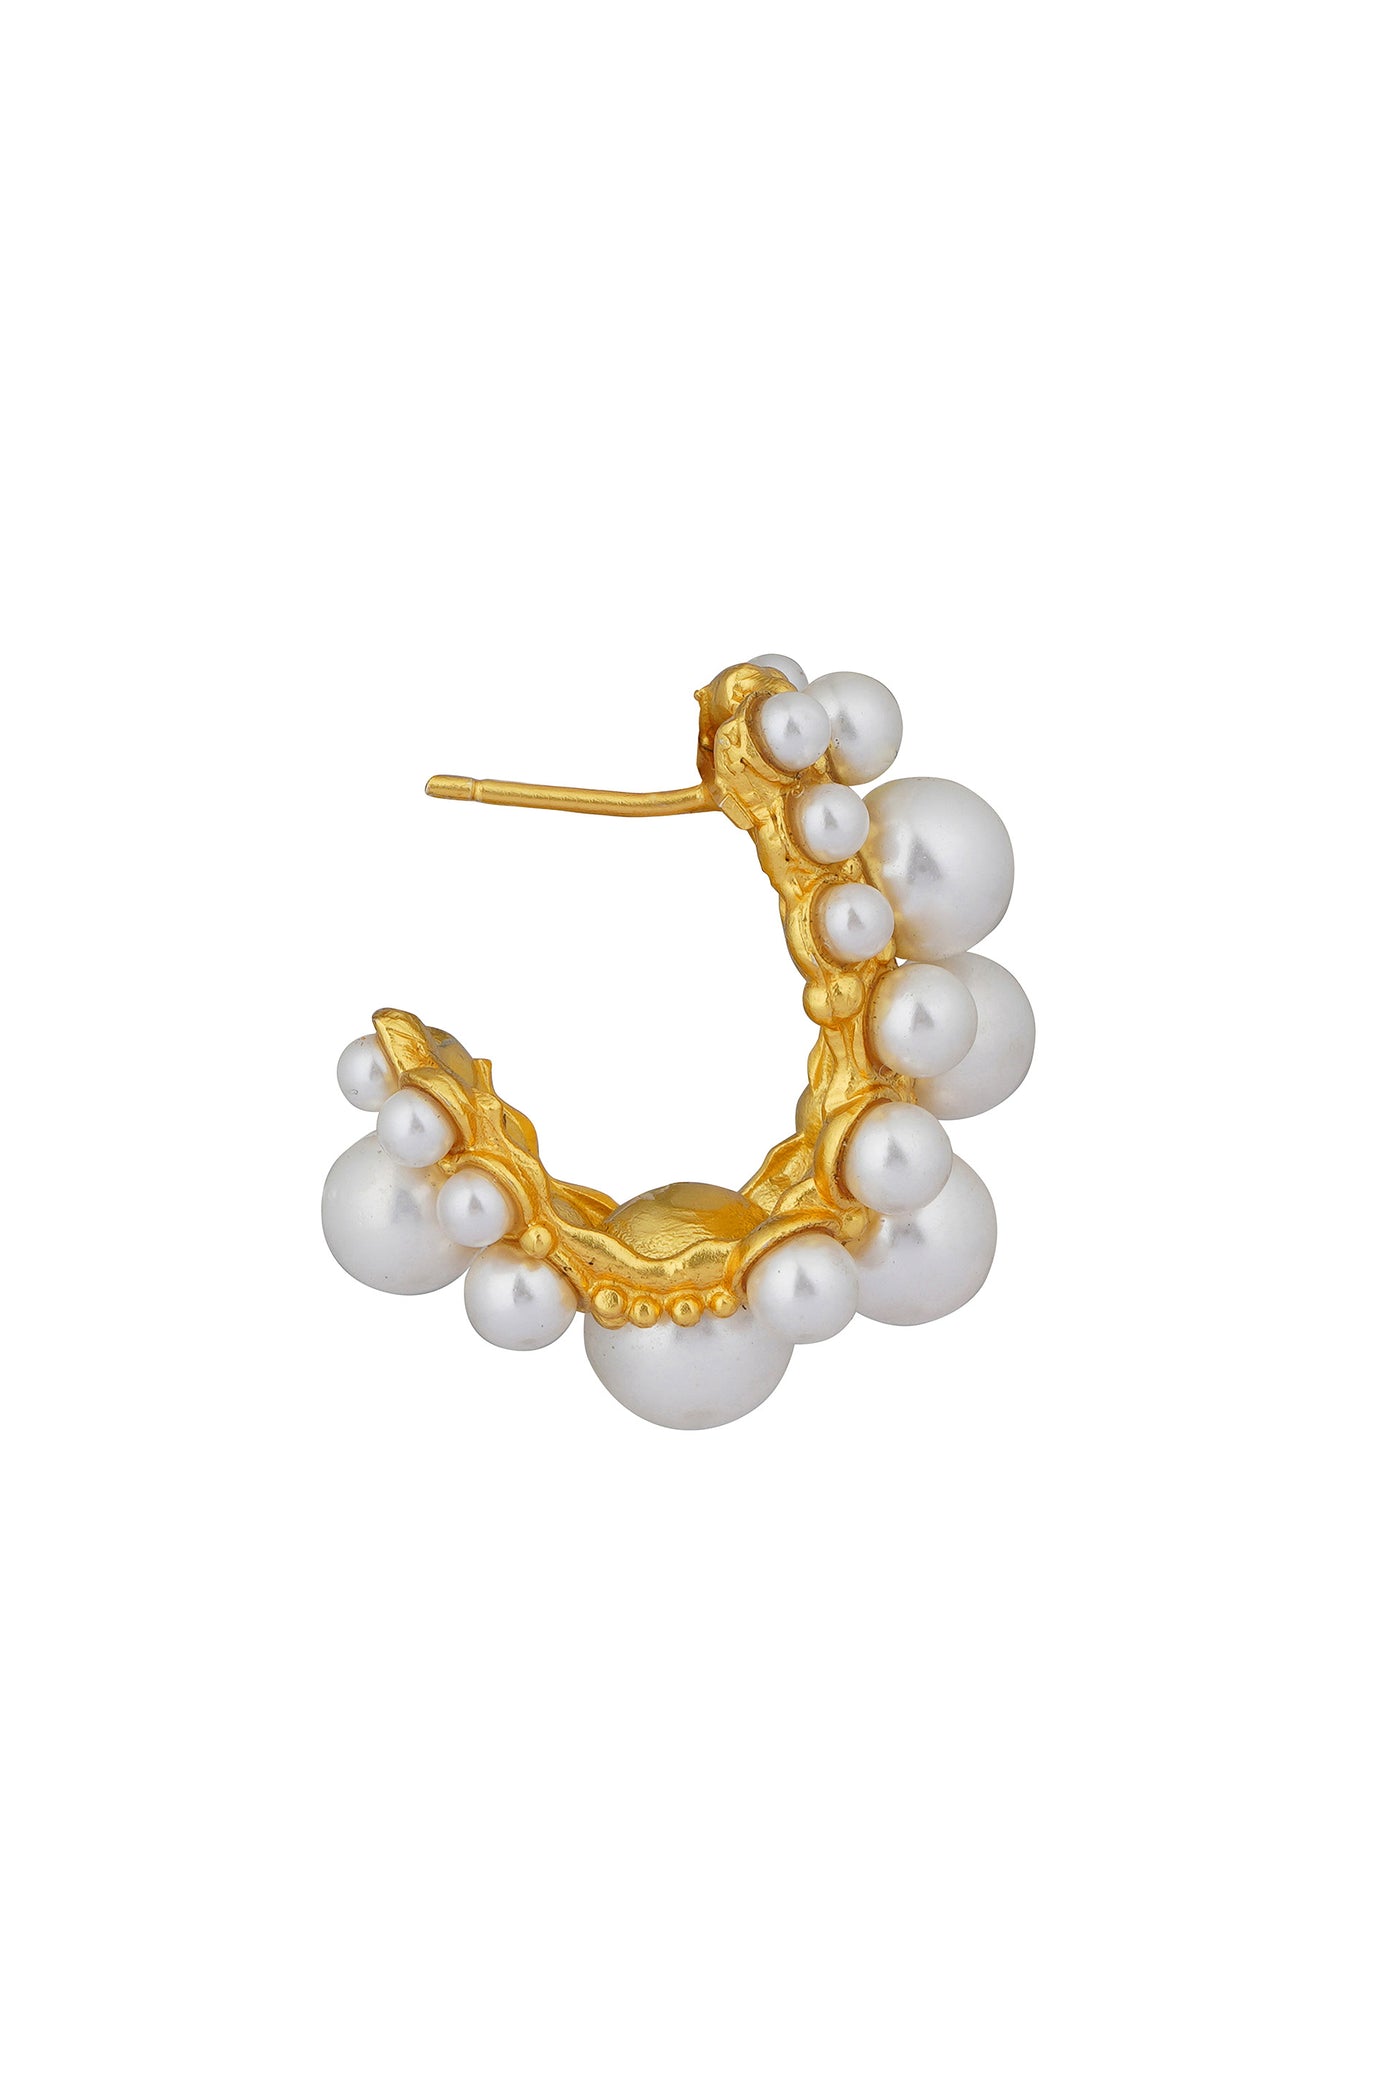 Zariin 22Kt Gold Plated Brass White Shell Pearl Glam & Party Wear Bubbles Hoops Earrings white gold fashion jewellery indian designer wear online shopping melange singapore